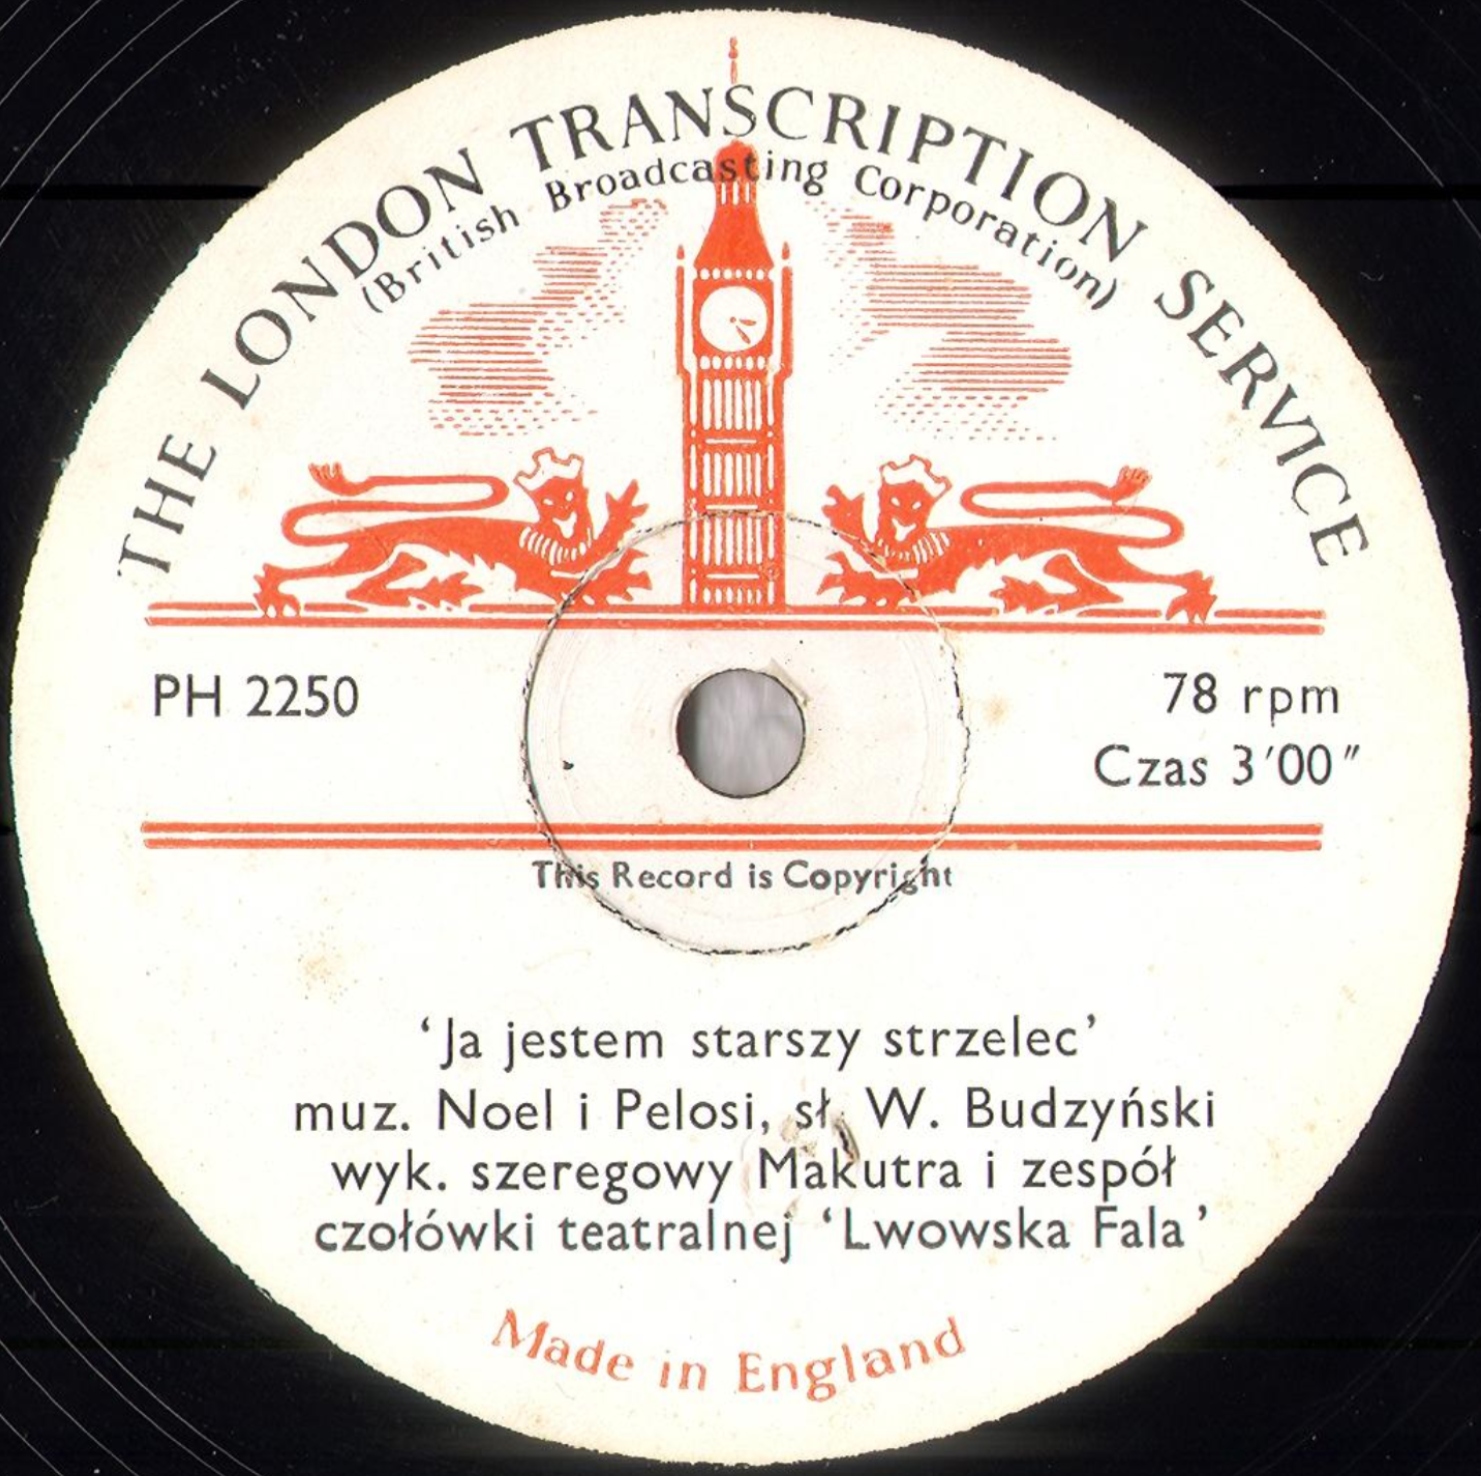 The London Transcription Service